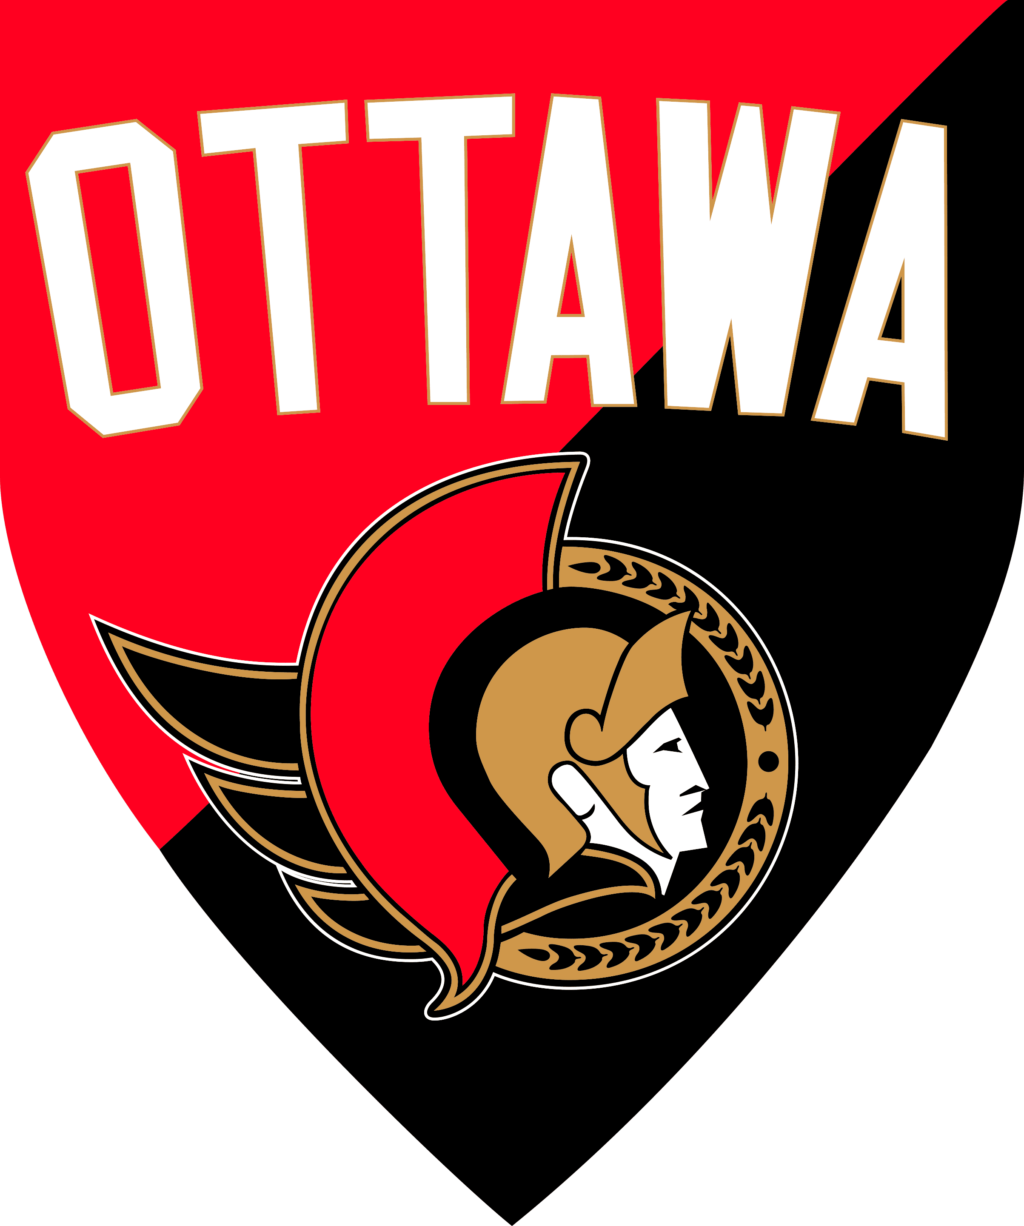 os 04 NHL Ottawa Senators, Ottawa Senators SVG Vector, Ottawa Senators Clipart, Ottawa Senators Ice Hockey Kit SVG, DXF, PNG, EPS Instant download NHL-Files for silhouette, files for clipping.